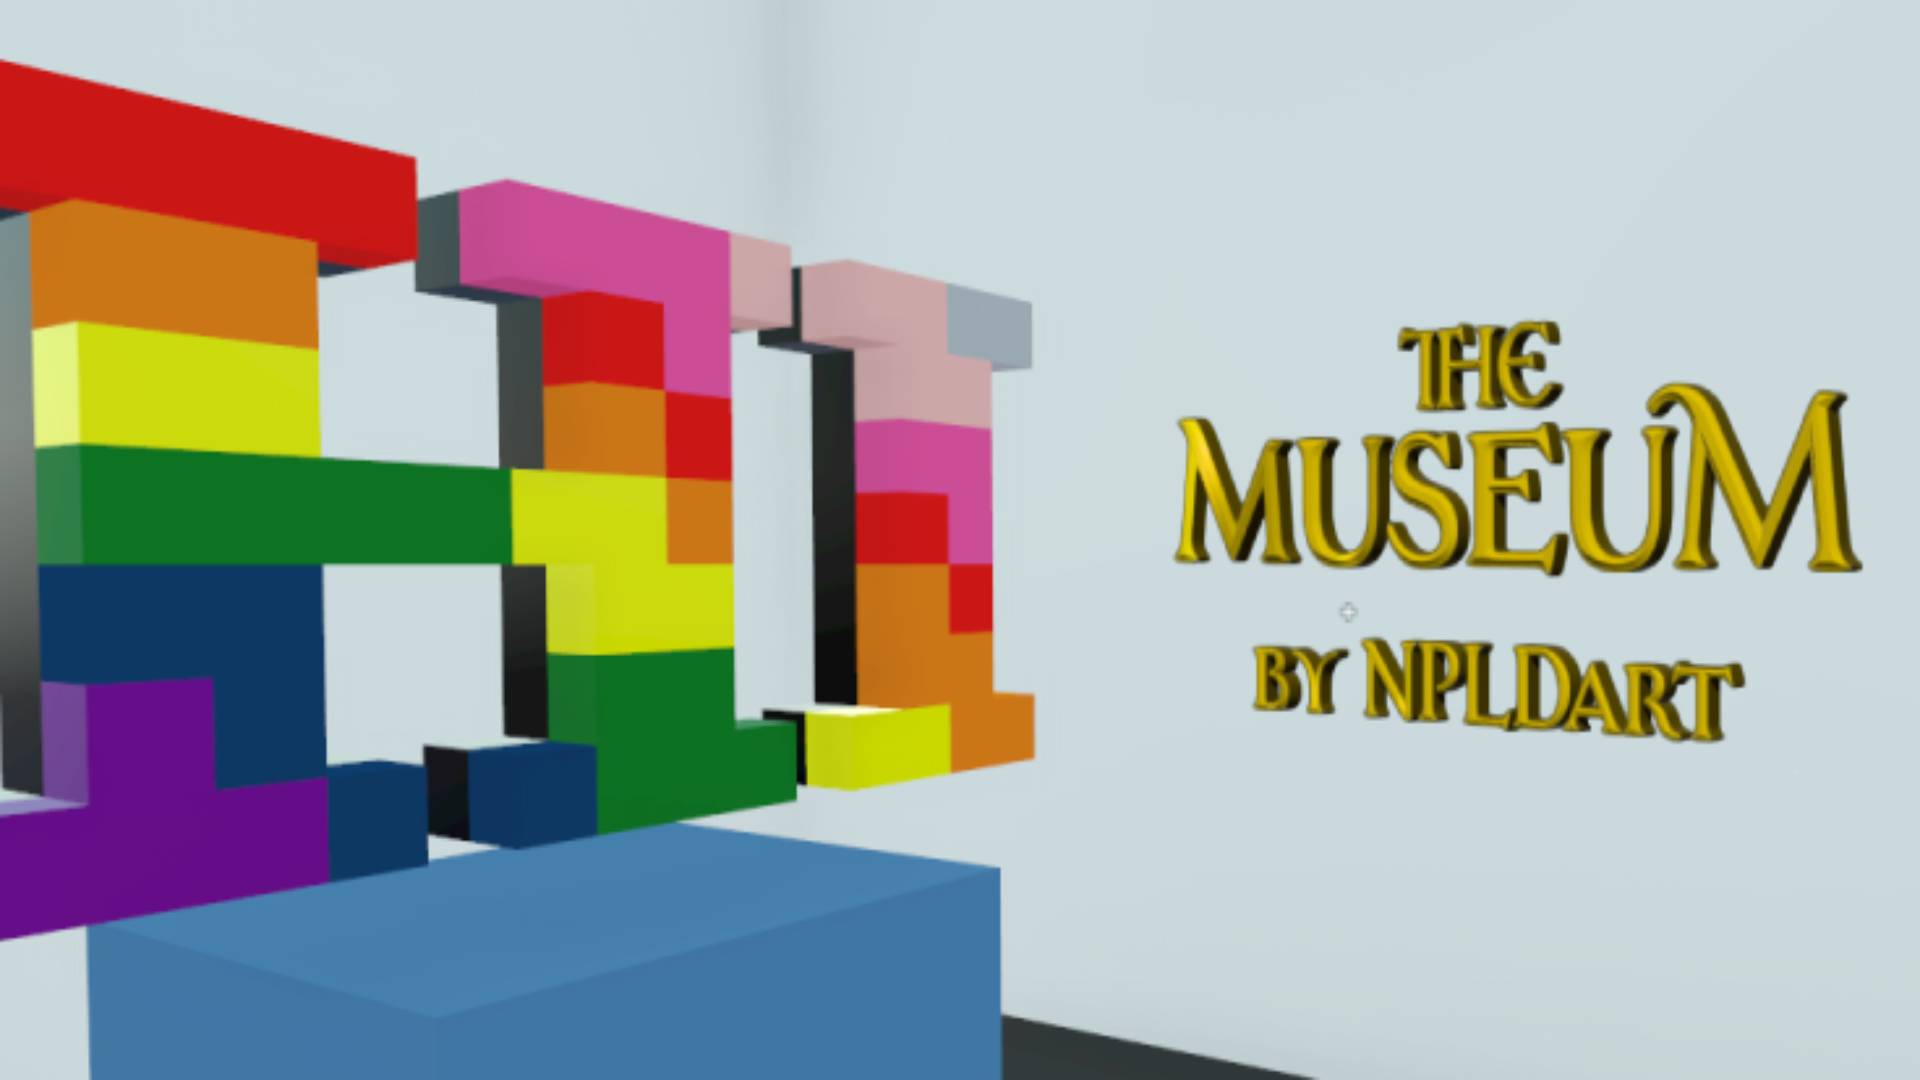 The Museum by NPLDart